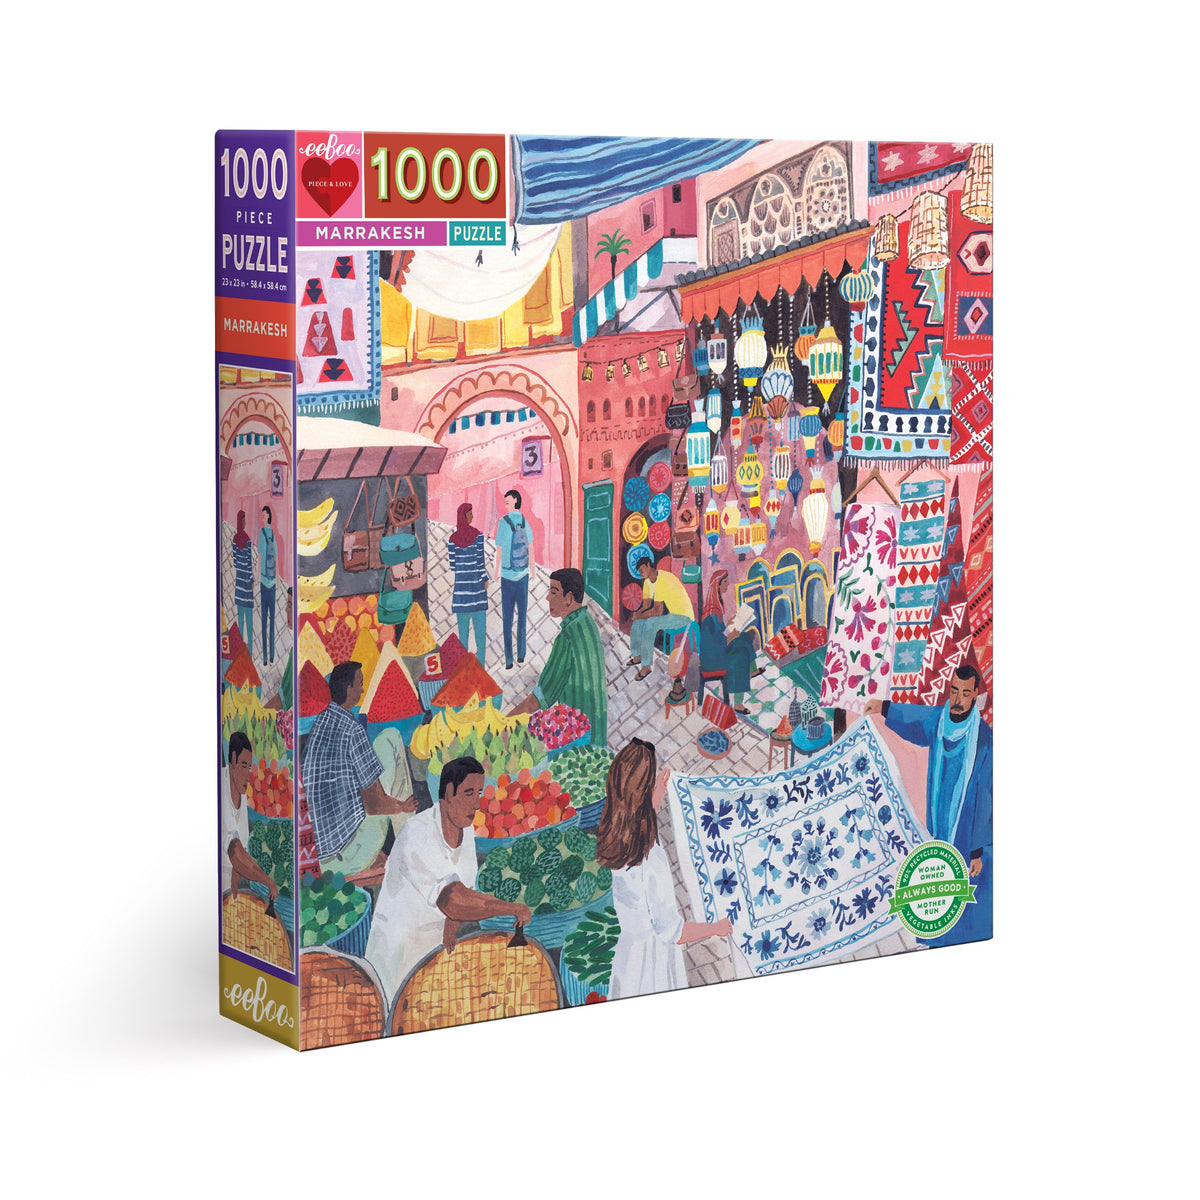 Marrakesh 1000 Piece Square Puzzle